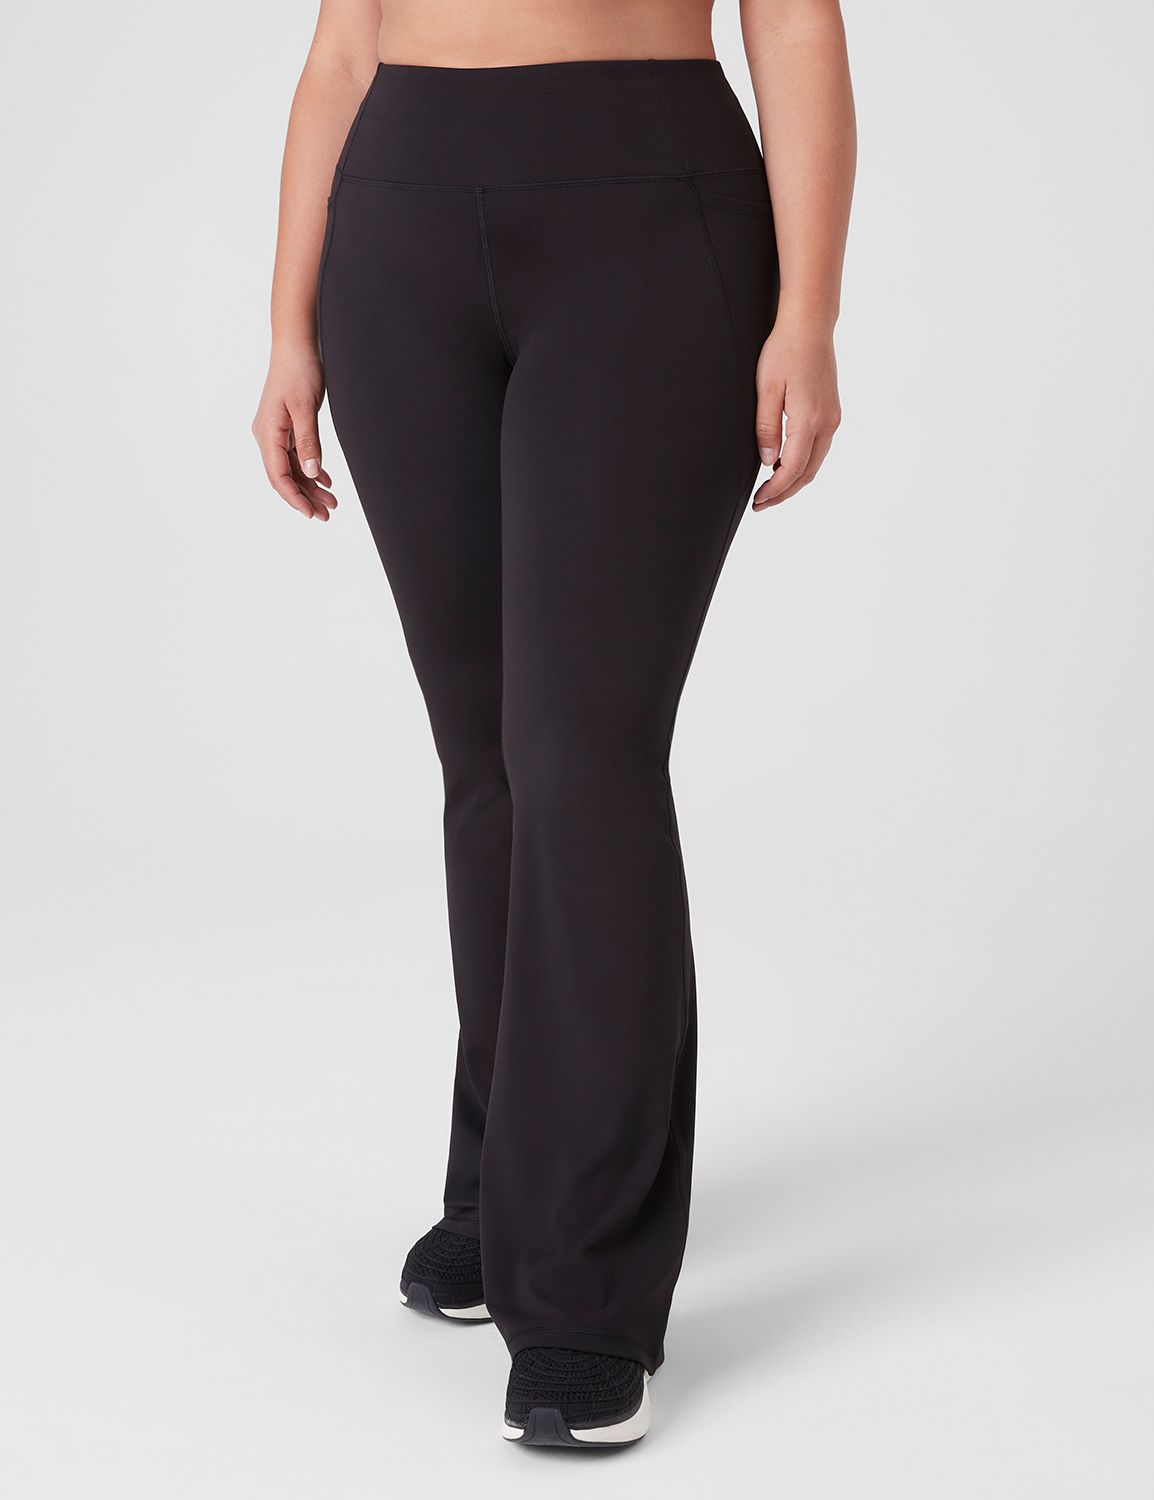 Livi Active Grey & Black Workout Pants NWT Womens Plus Size 22/24 3X